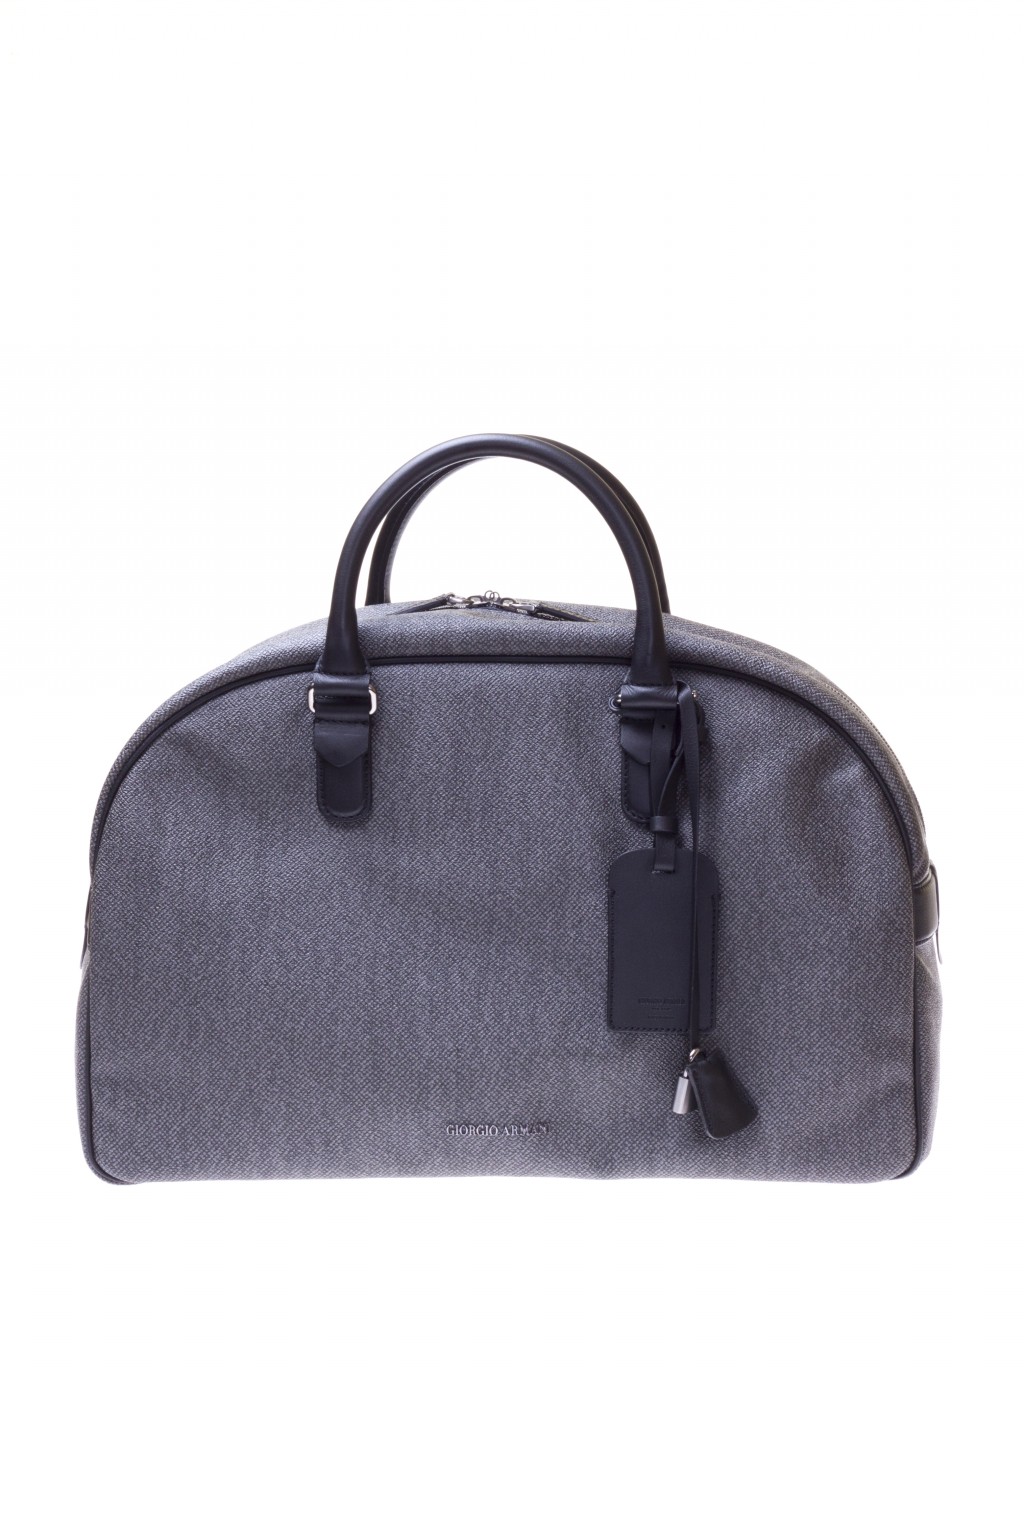 Giorgio Armani Small Travel Bag | Men's Bags | Vitkac